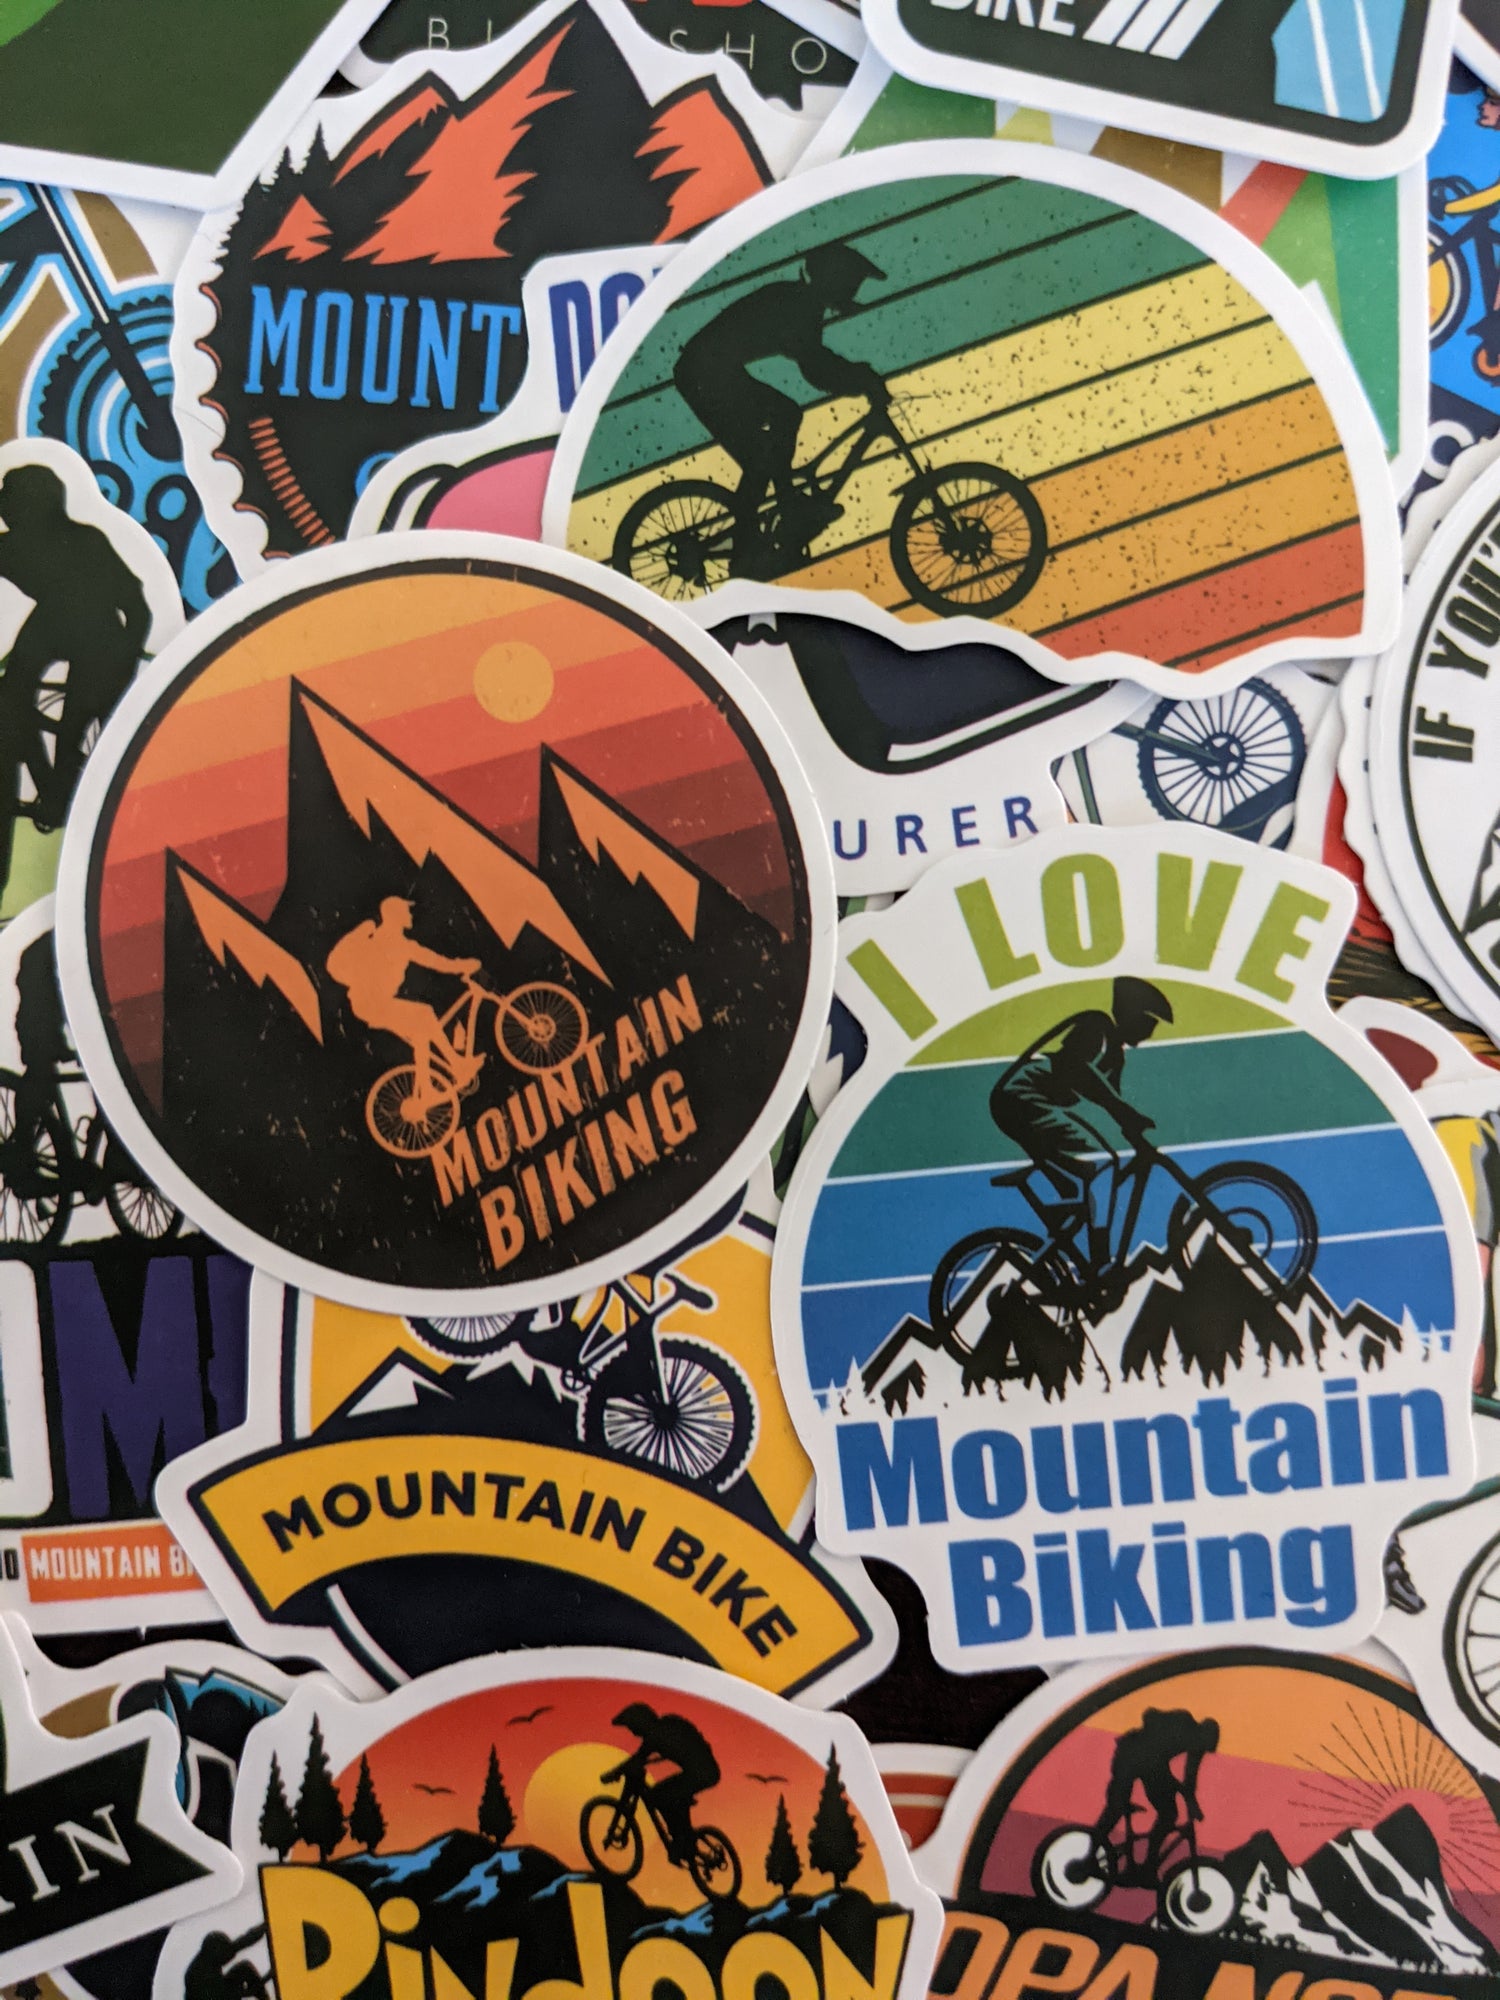 Melon Bike Stickers, Bike Stickers, Bicycle Stickers, Bicycle